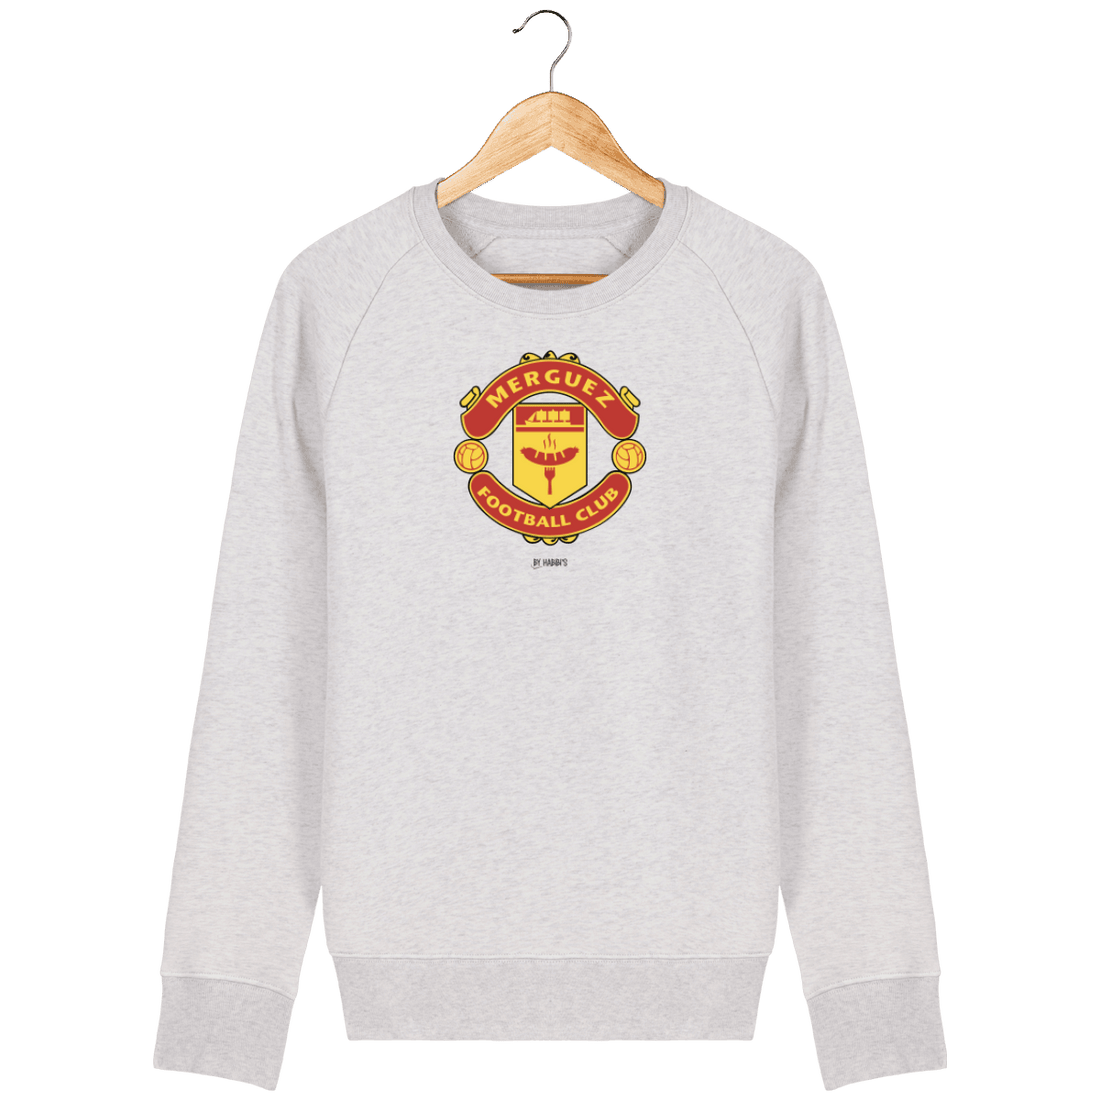 Homme>Sweatshirts - Sweat Homme Merguez Football Club